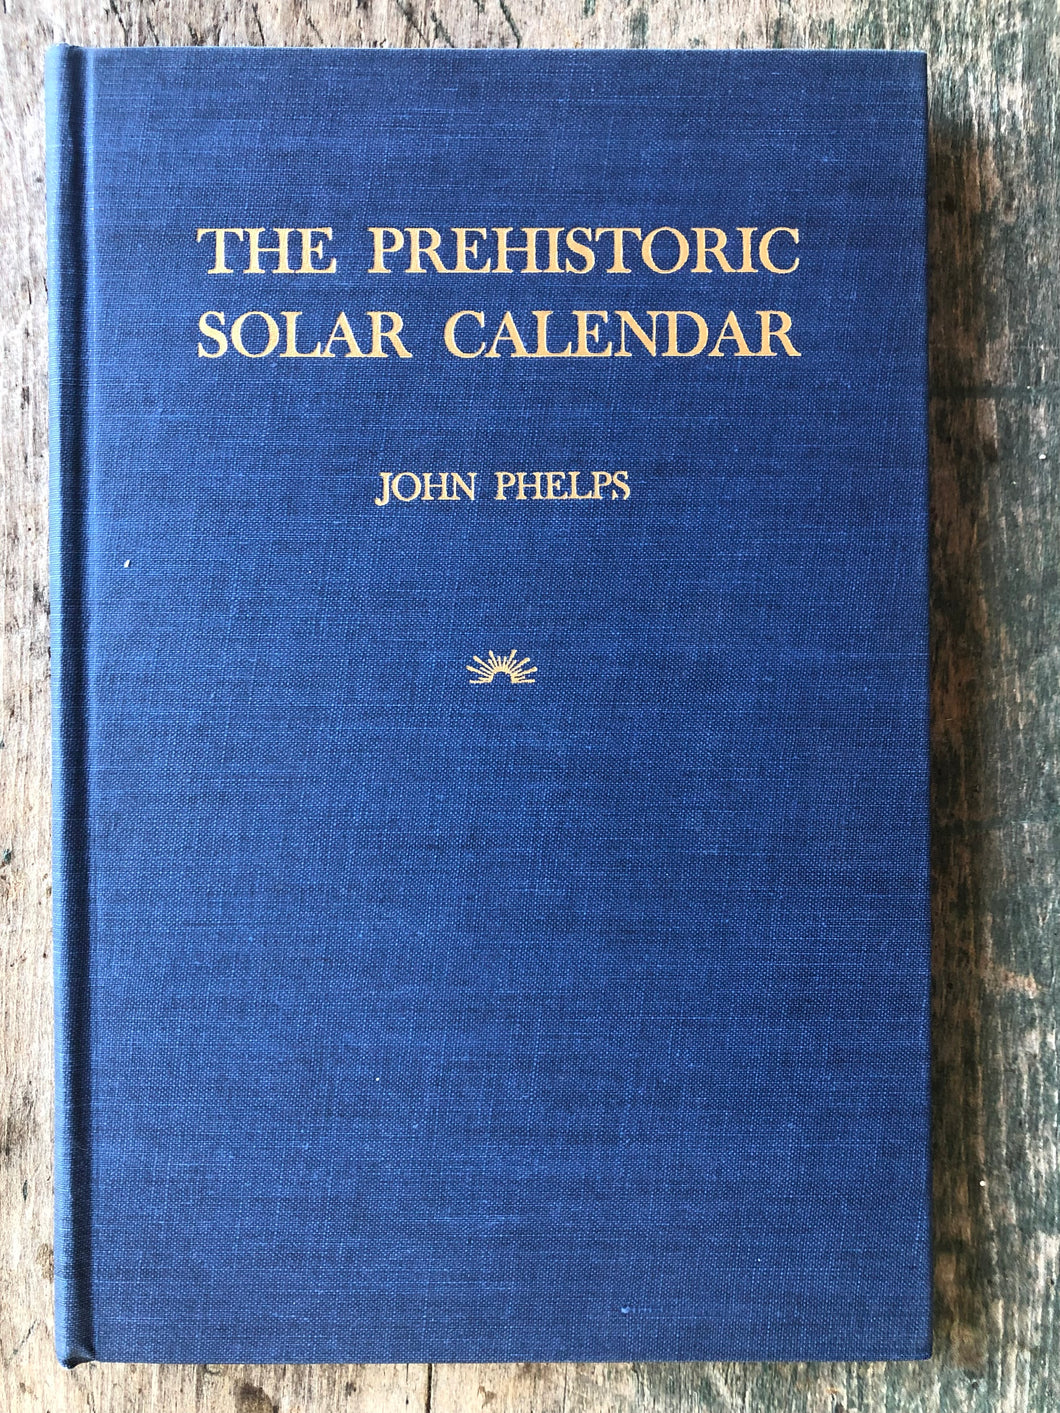 The Prehistoric Solar Calendar. by John Phelps